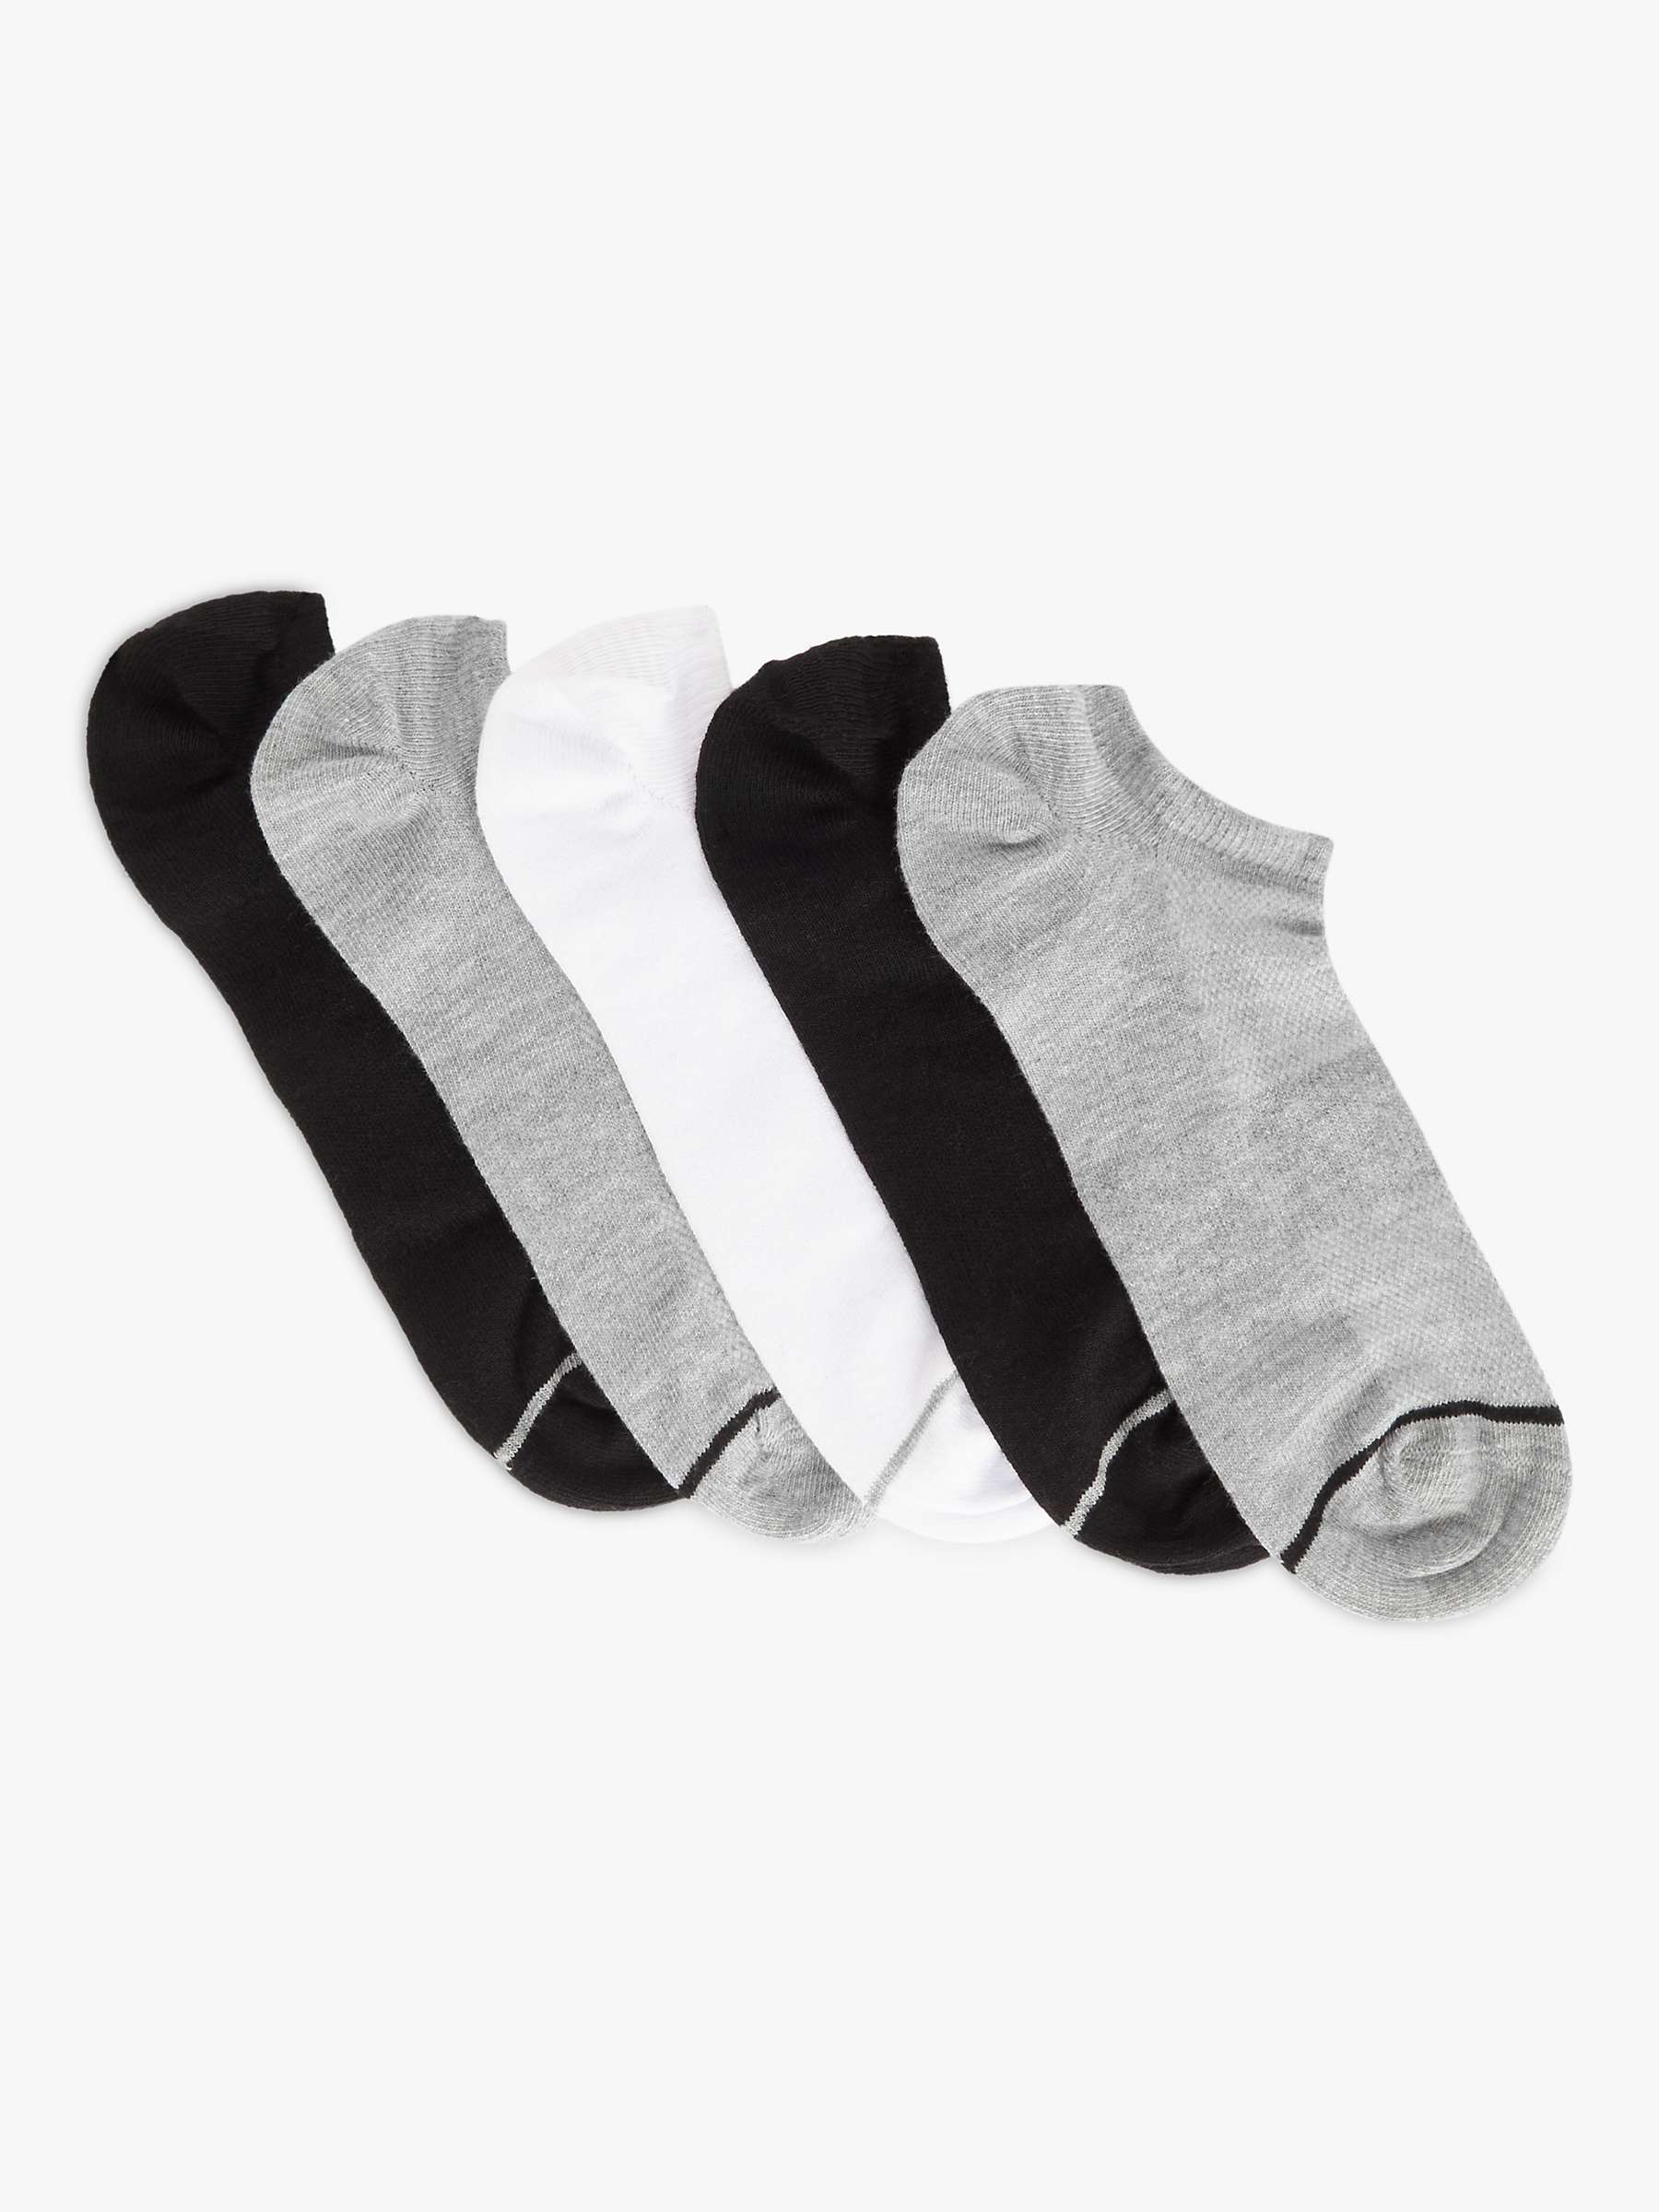 Buy John Lewis ANYDAY Plain Trainer Liner Socks, Pack of 5 Online at johnlewis.com